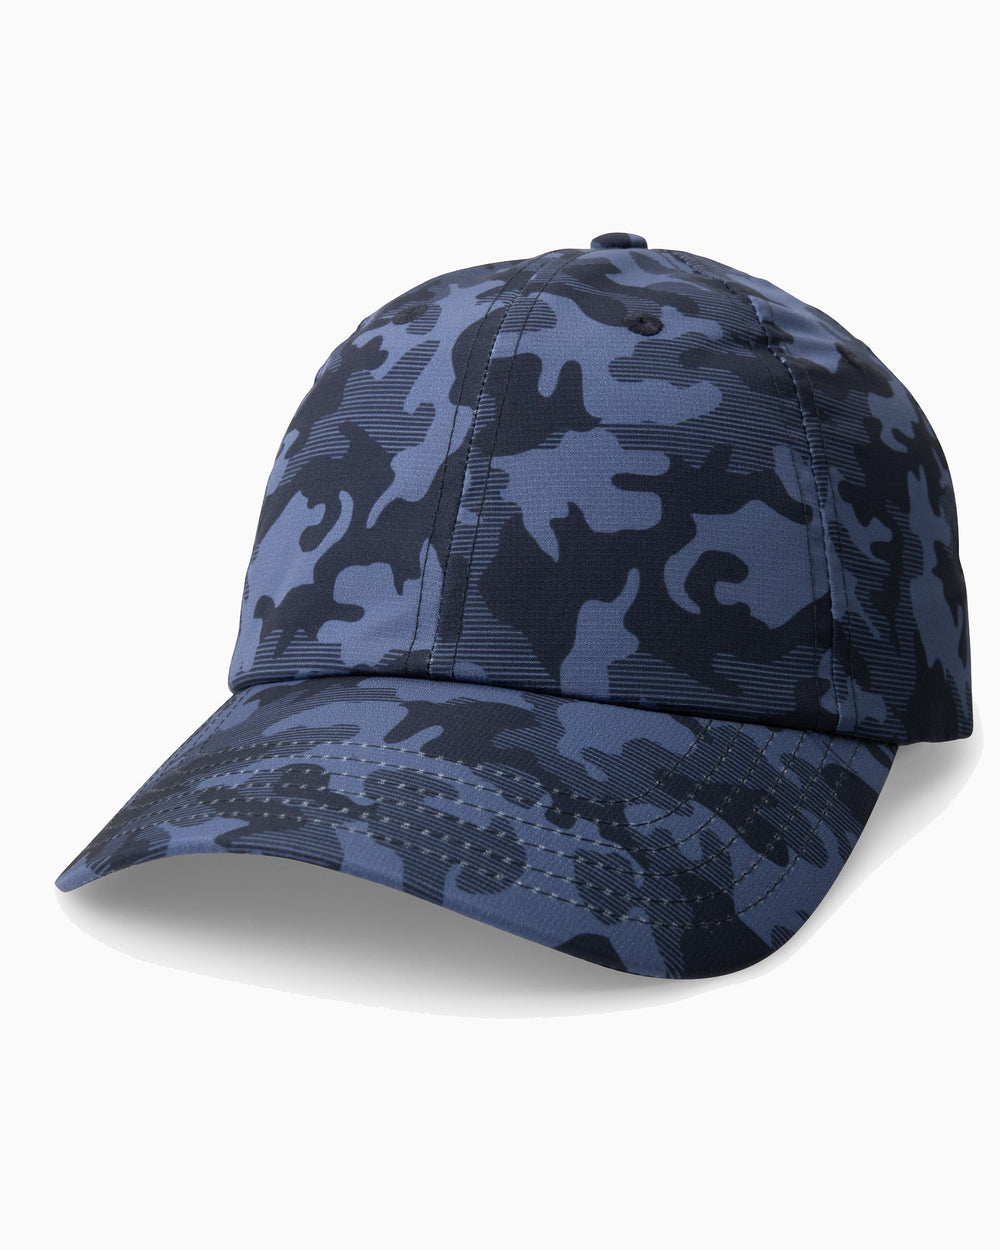 Camo Printed Performance Hat